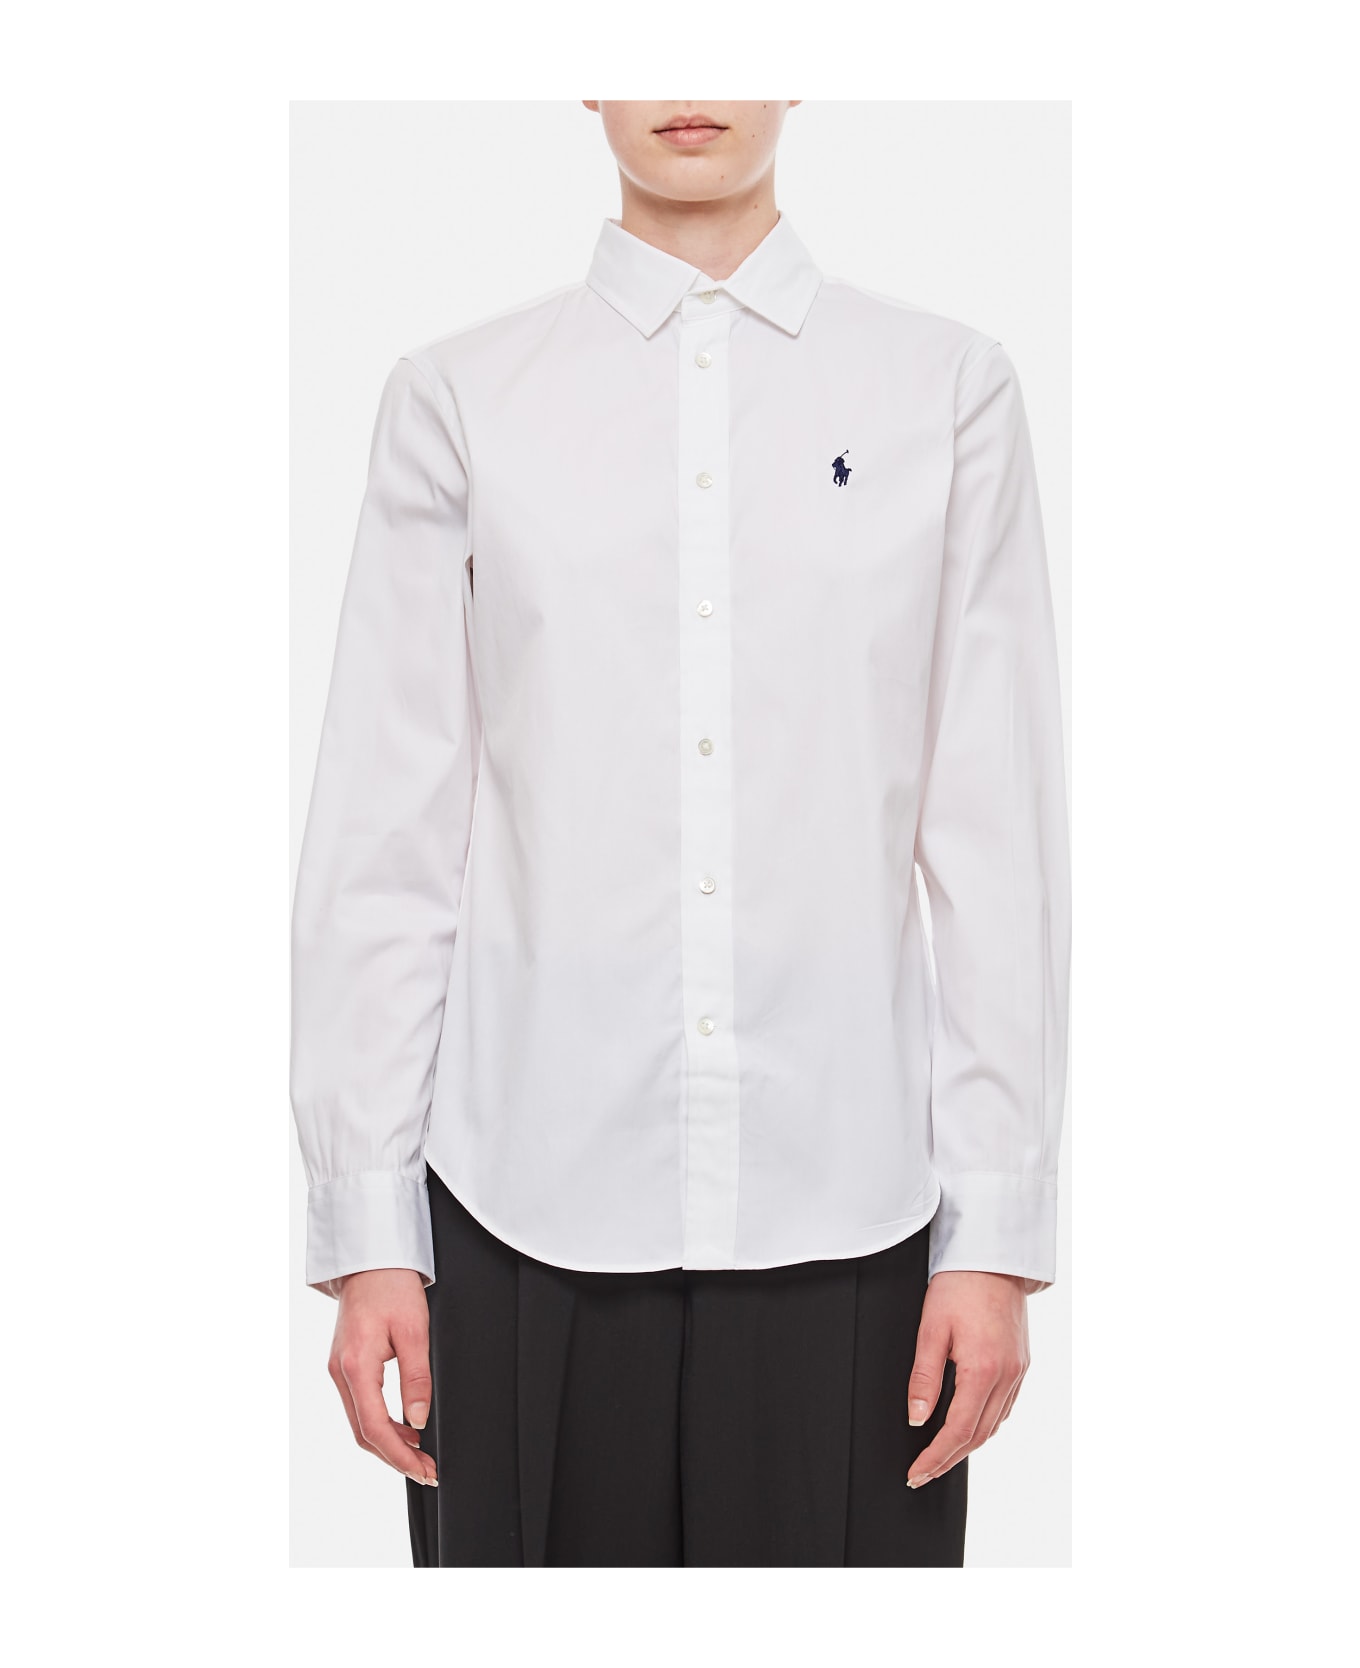 Polo Ralph Lauren Long Sleeve Button Front Shirt - White